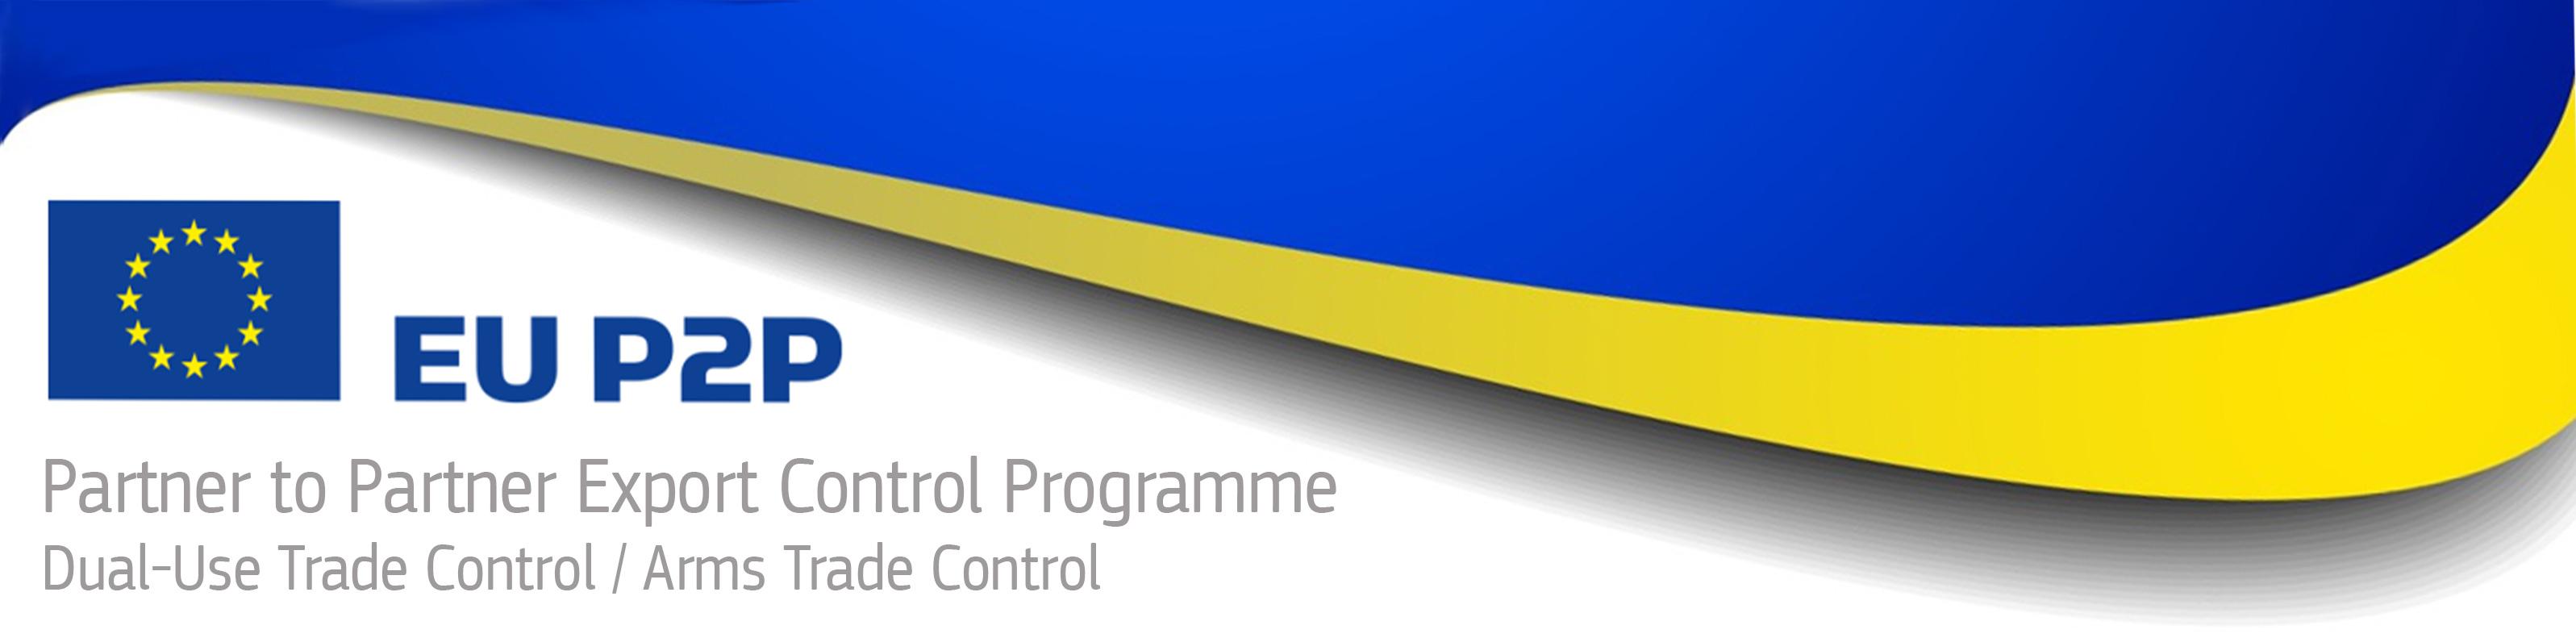 EU P2P homepage banner